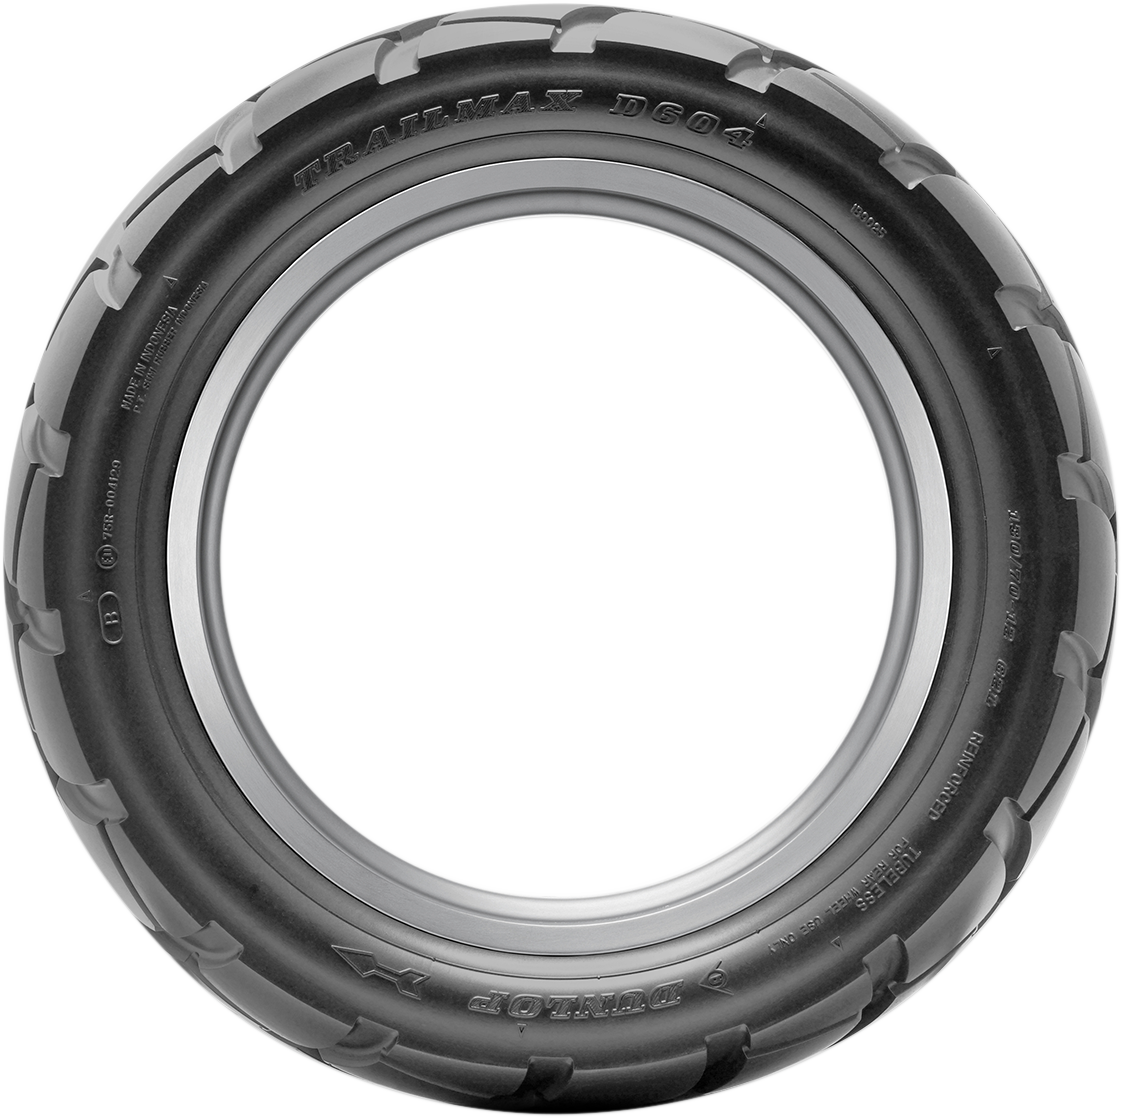 DUNLOP Tire - D604 - Rear - 130/70-12 - 62L 45215531